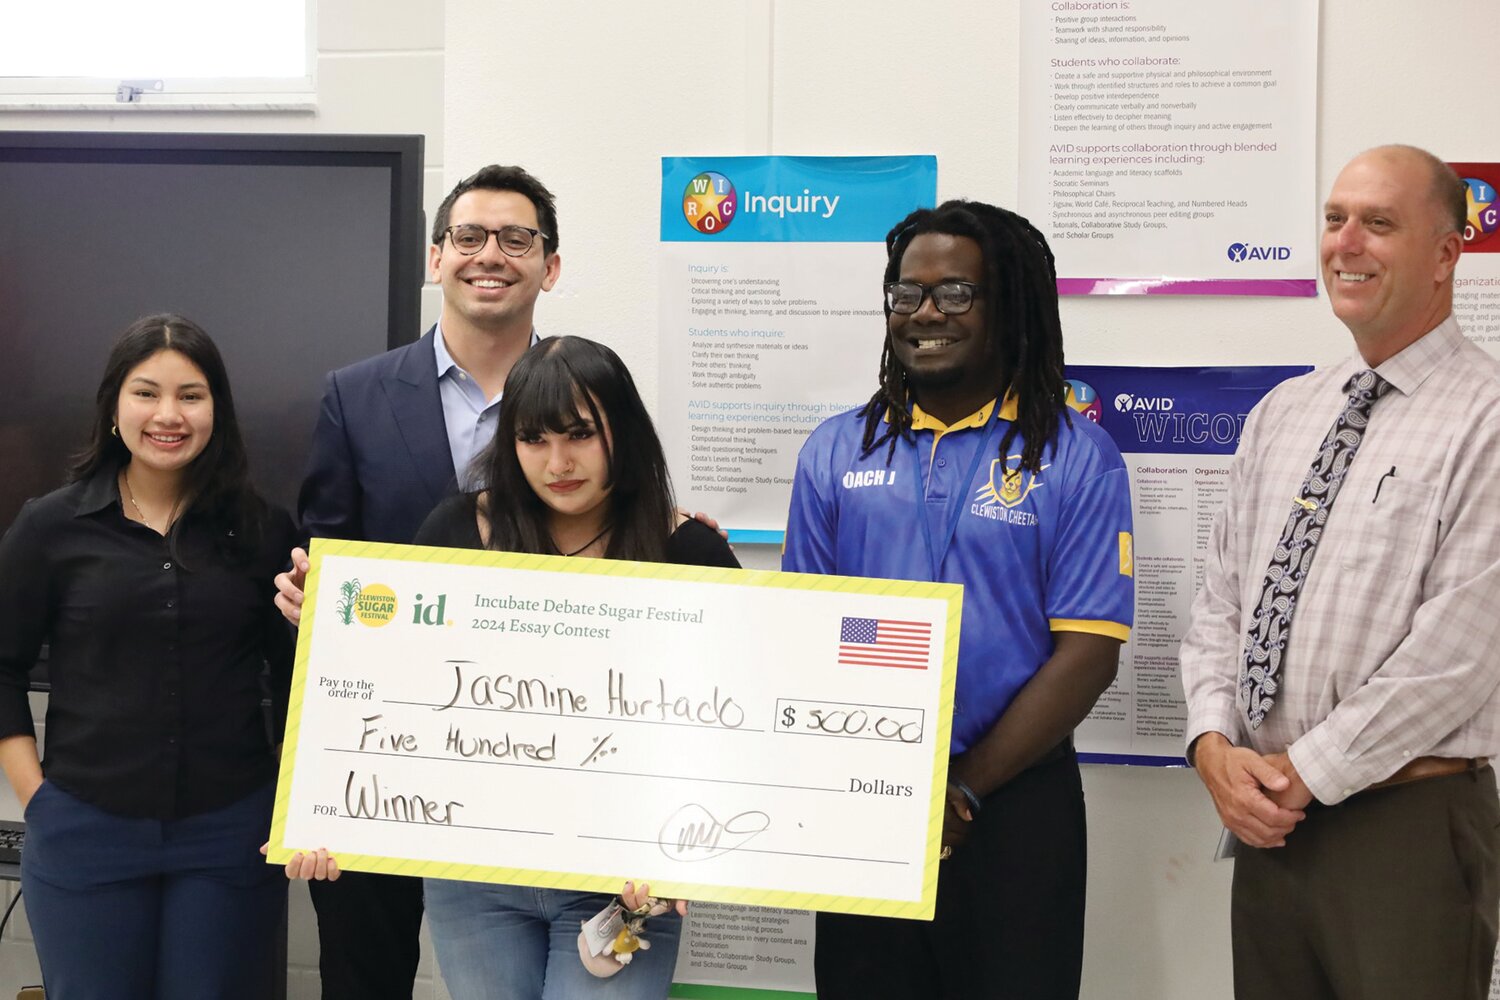 Jasmine Hurtado received $500 for winning the 2024 Sugar Festival + Incubate Debate Essay Contest.